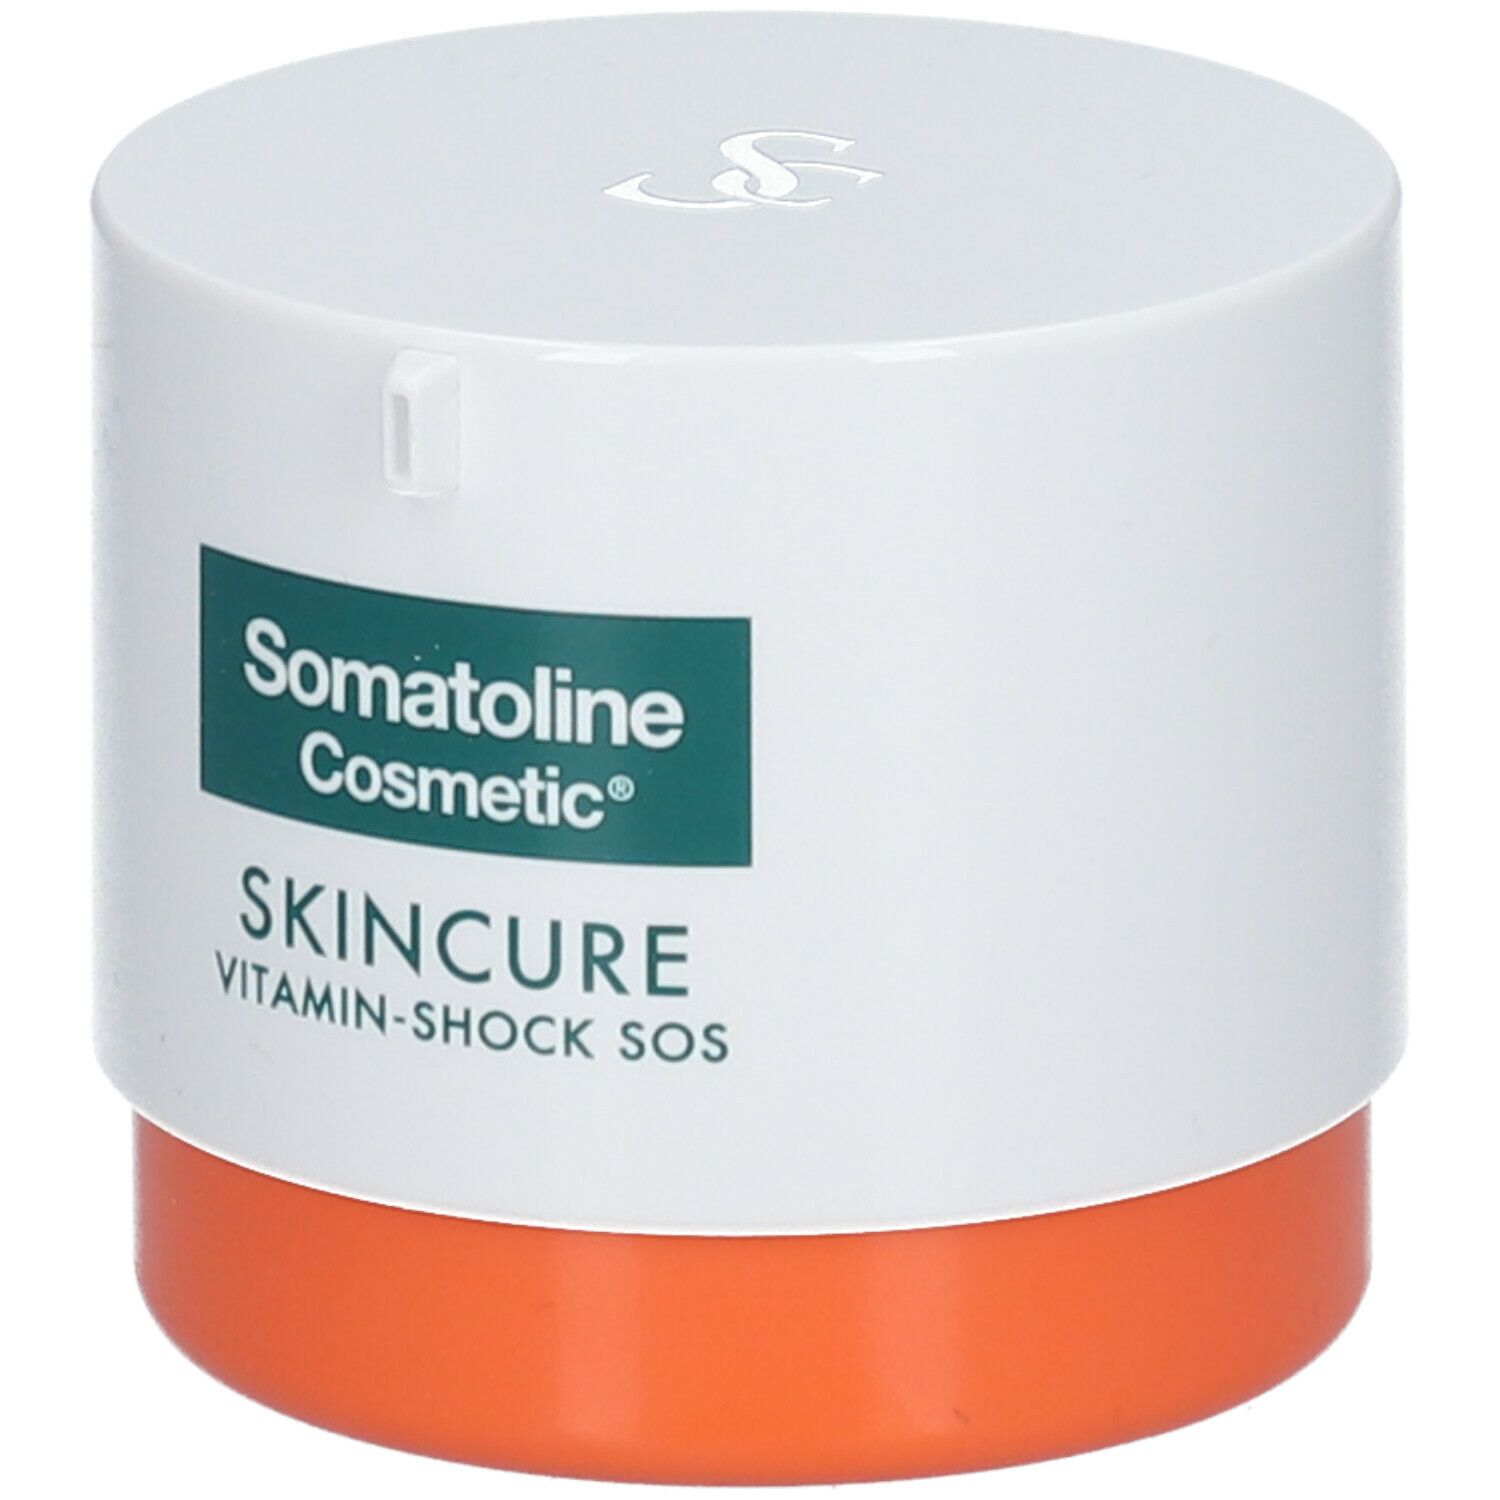 Somatoline Cosmetic® Skincure Vitamin-Shock SOS